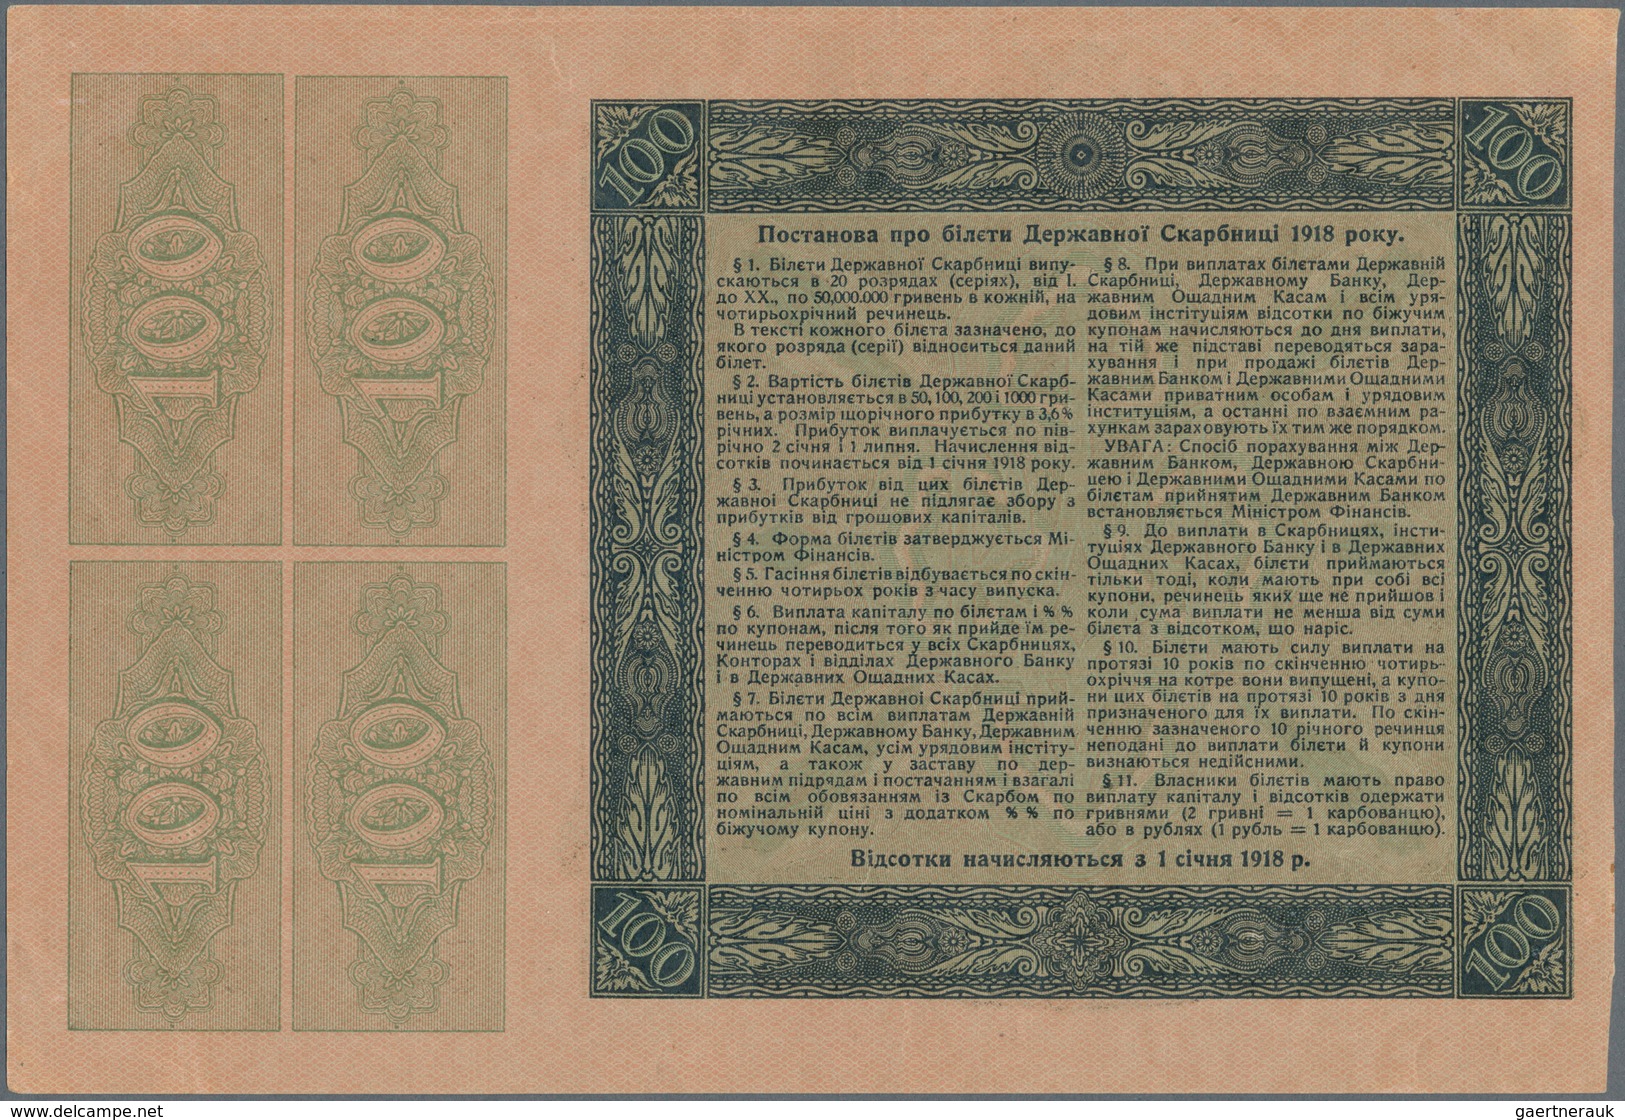 Ukraina / Ukraine: 100 Hriven 1918 "3.6% Bond" Certificates Issue, P.13 With 4 Cupons Of 1 Hriven 80 - Ucrania